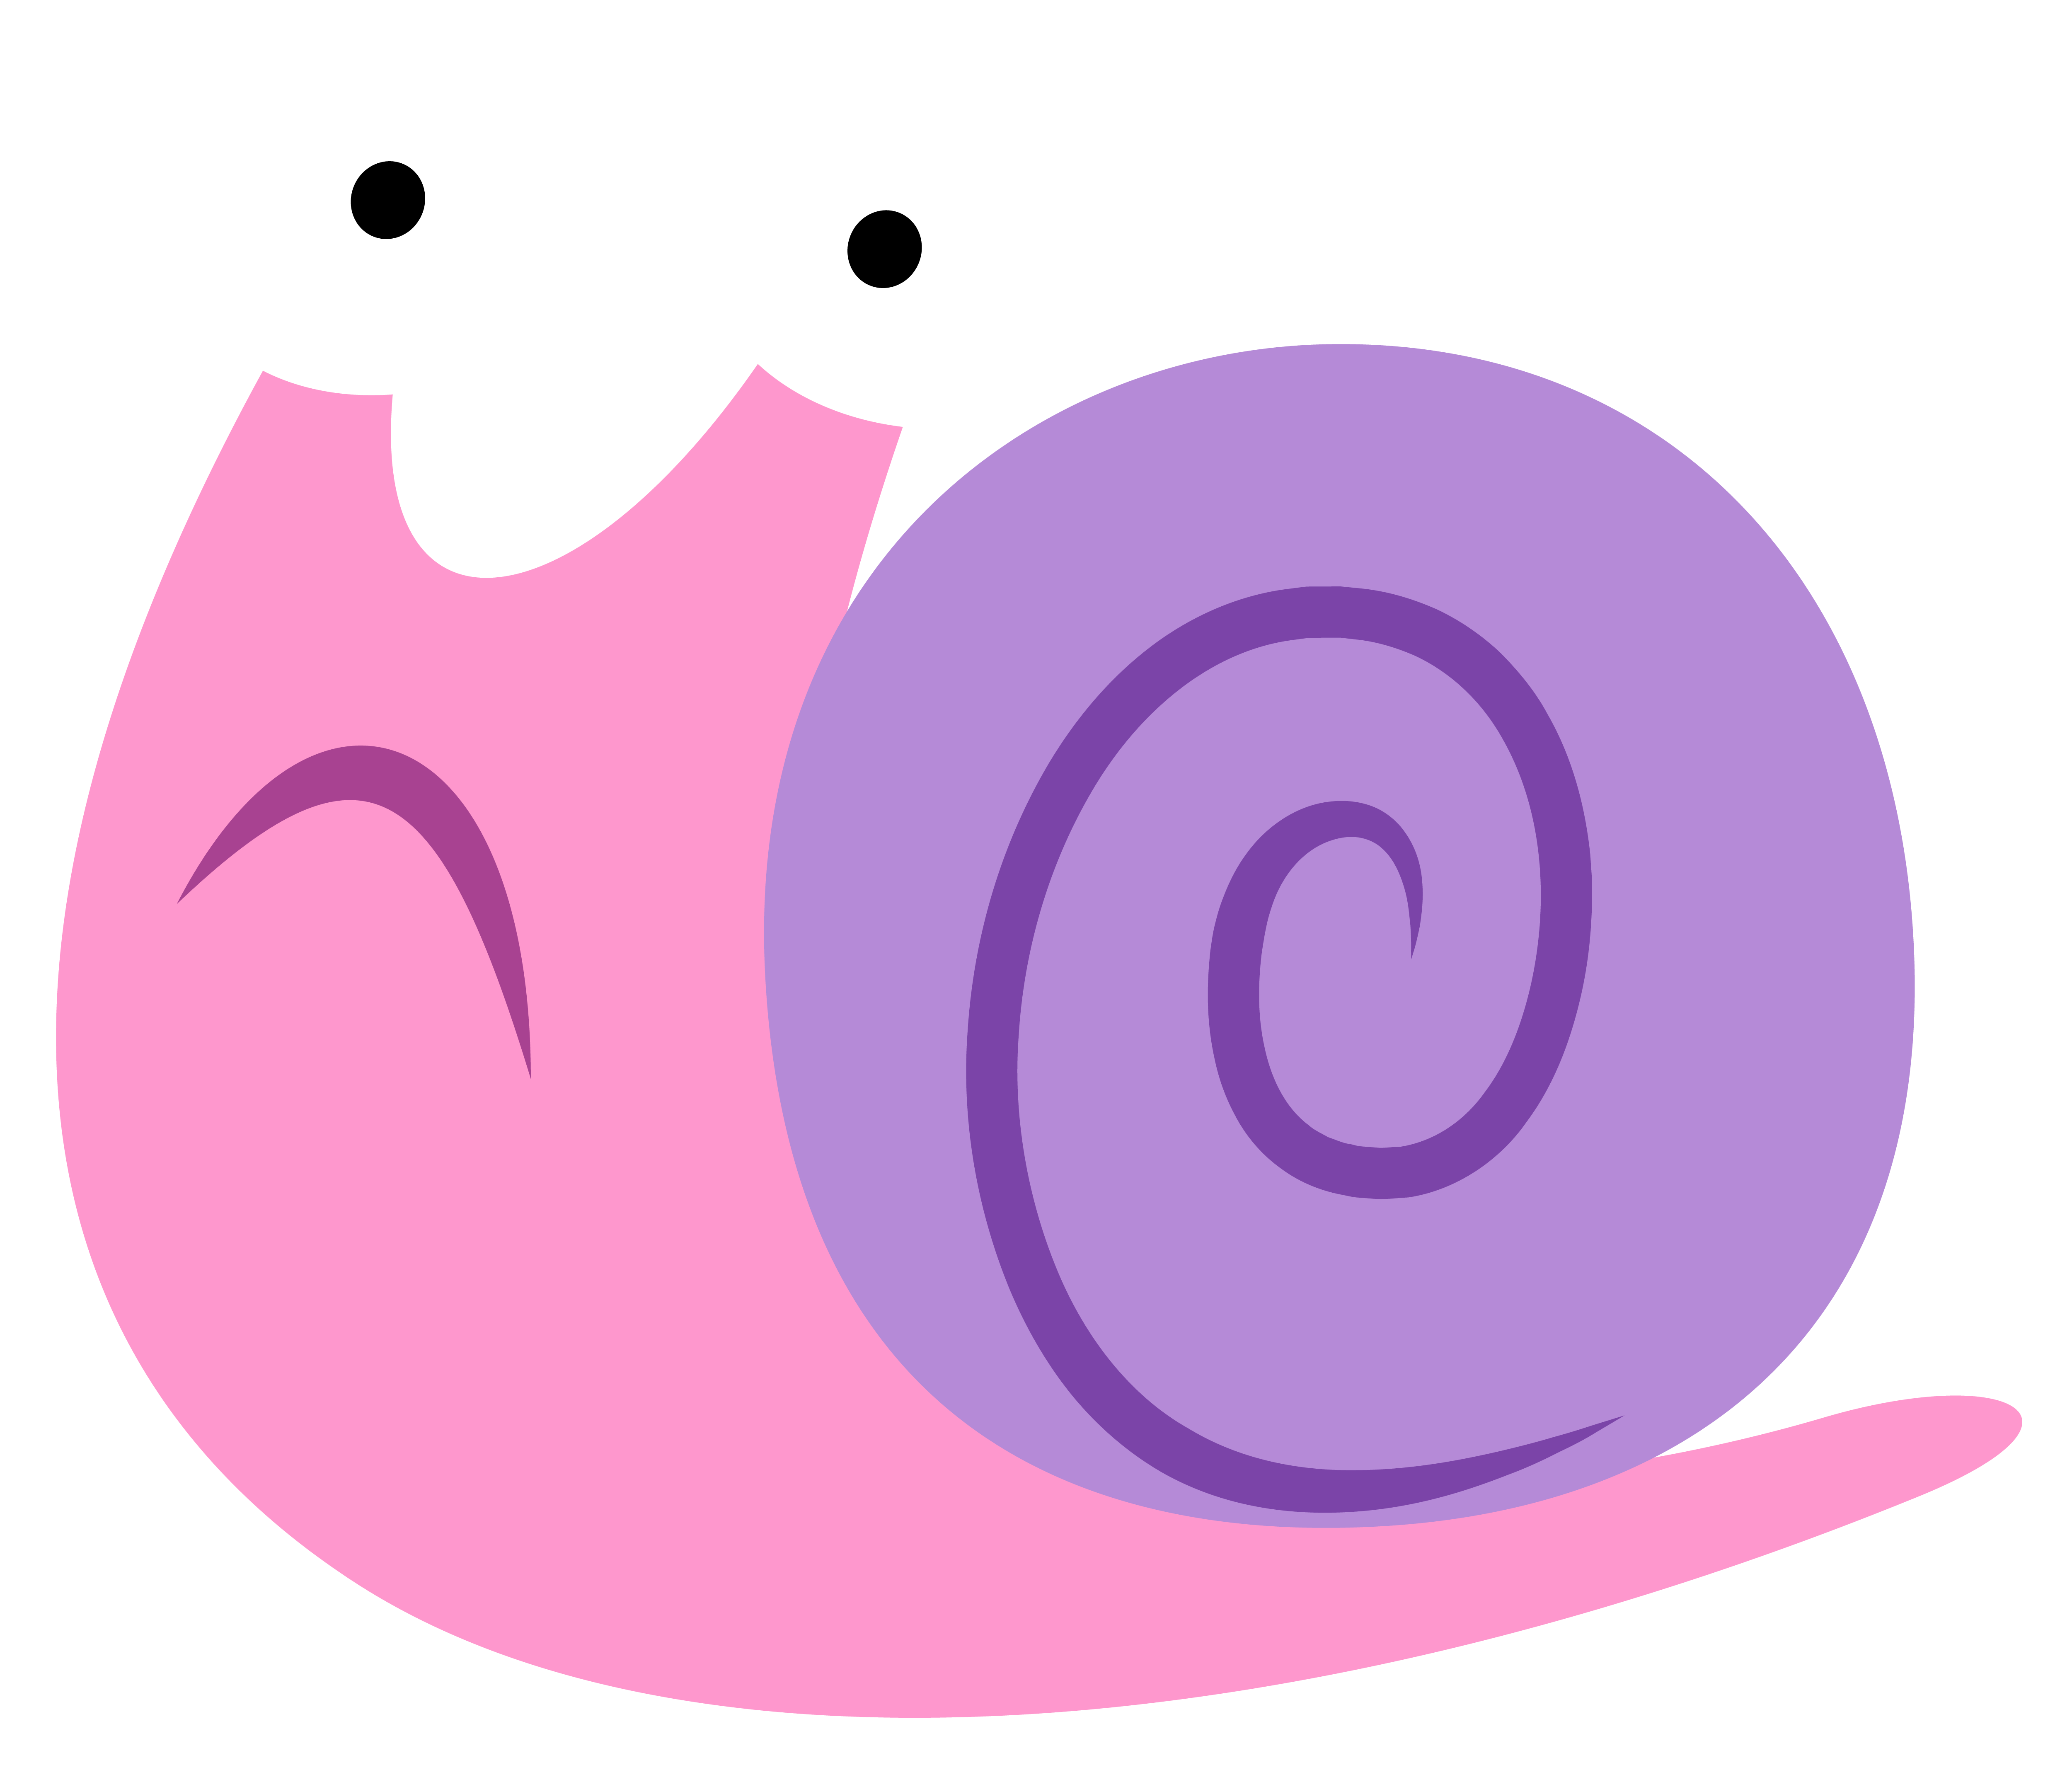 Snails' Cutie Mark